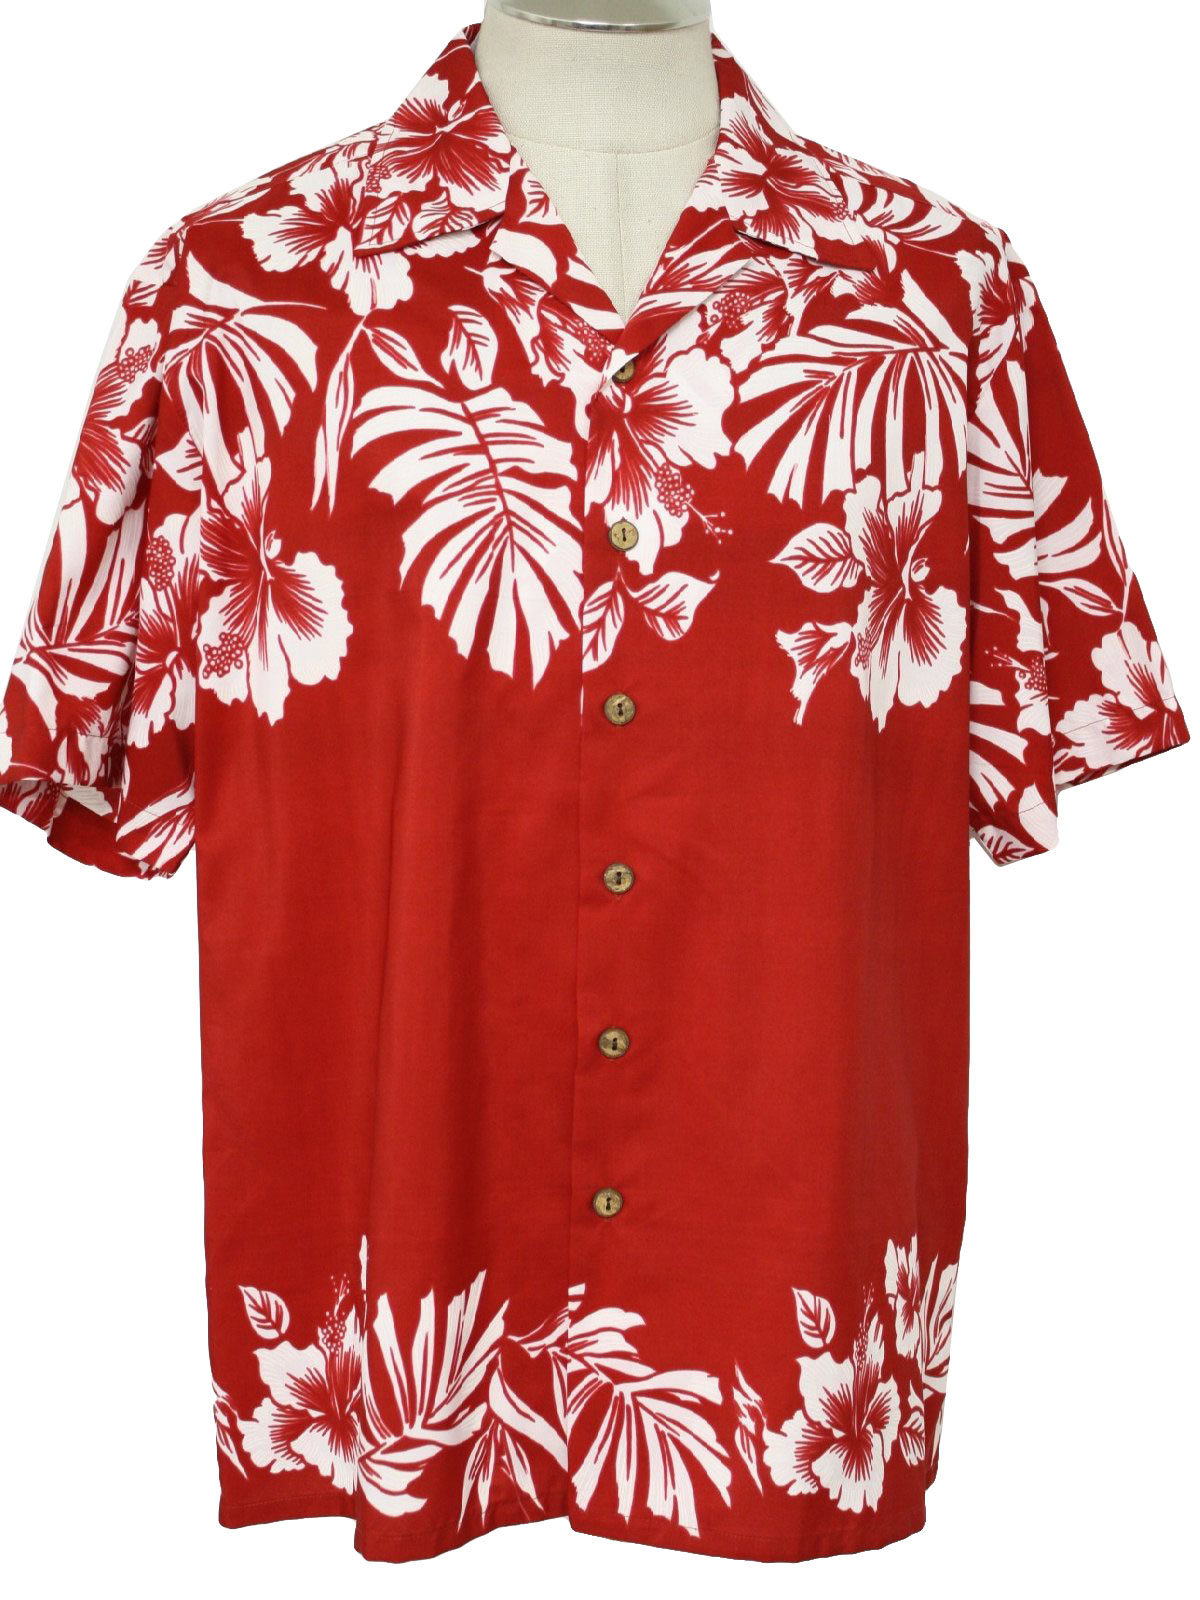 Vintage Eighties Hawaiian Shirt: 80s style (made more recently) -no ...